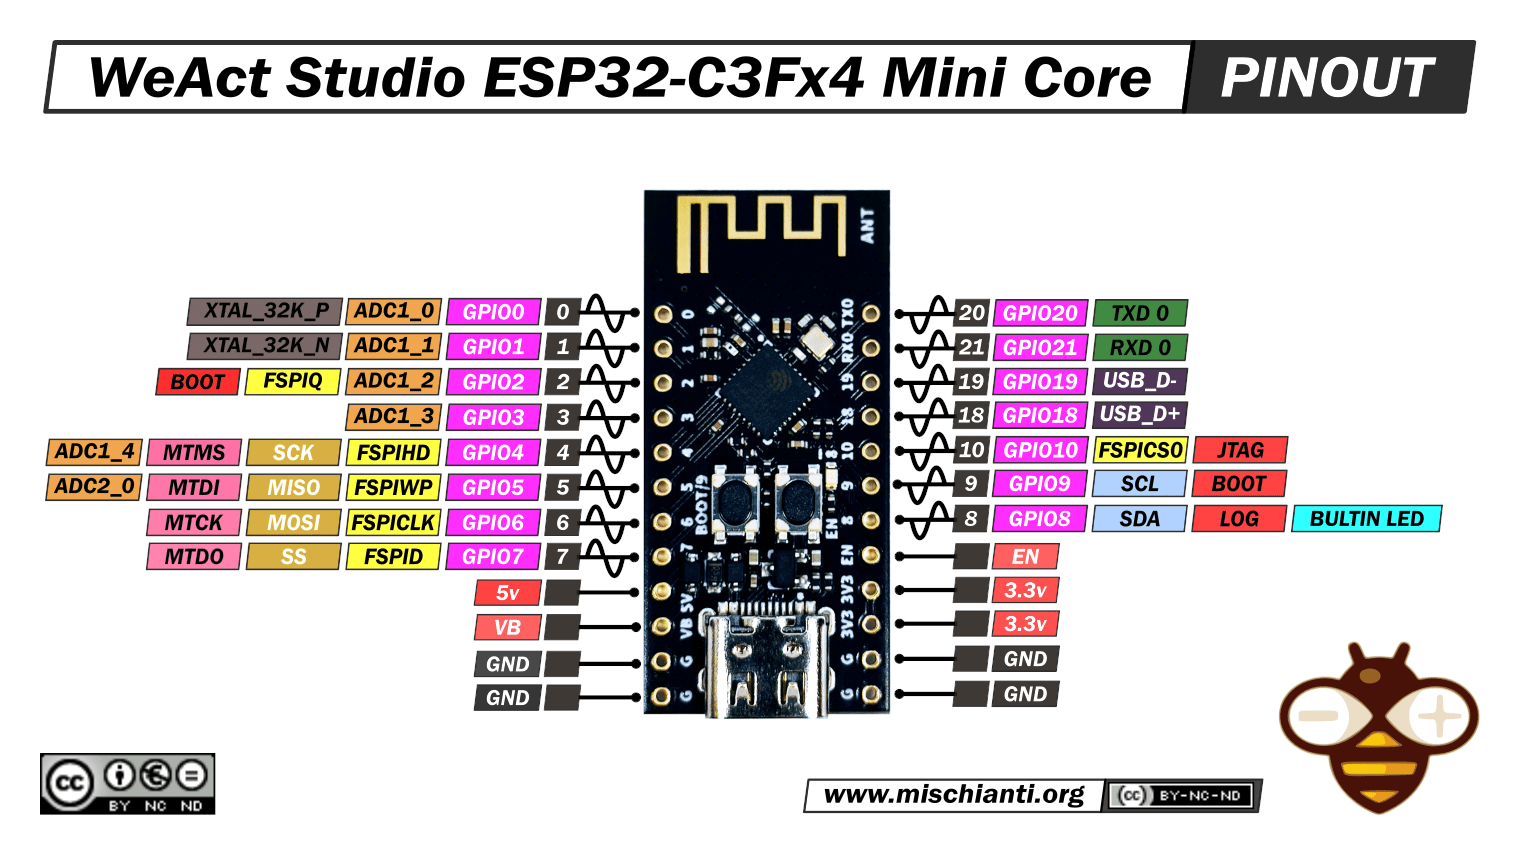 WeAct Studio ESP32 C3 Core: high-resolution pinout and specs